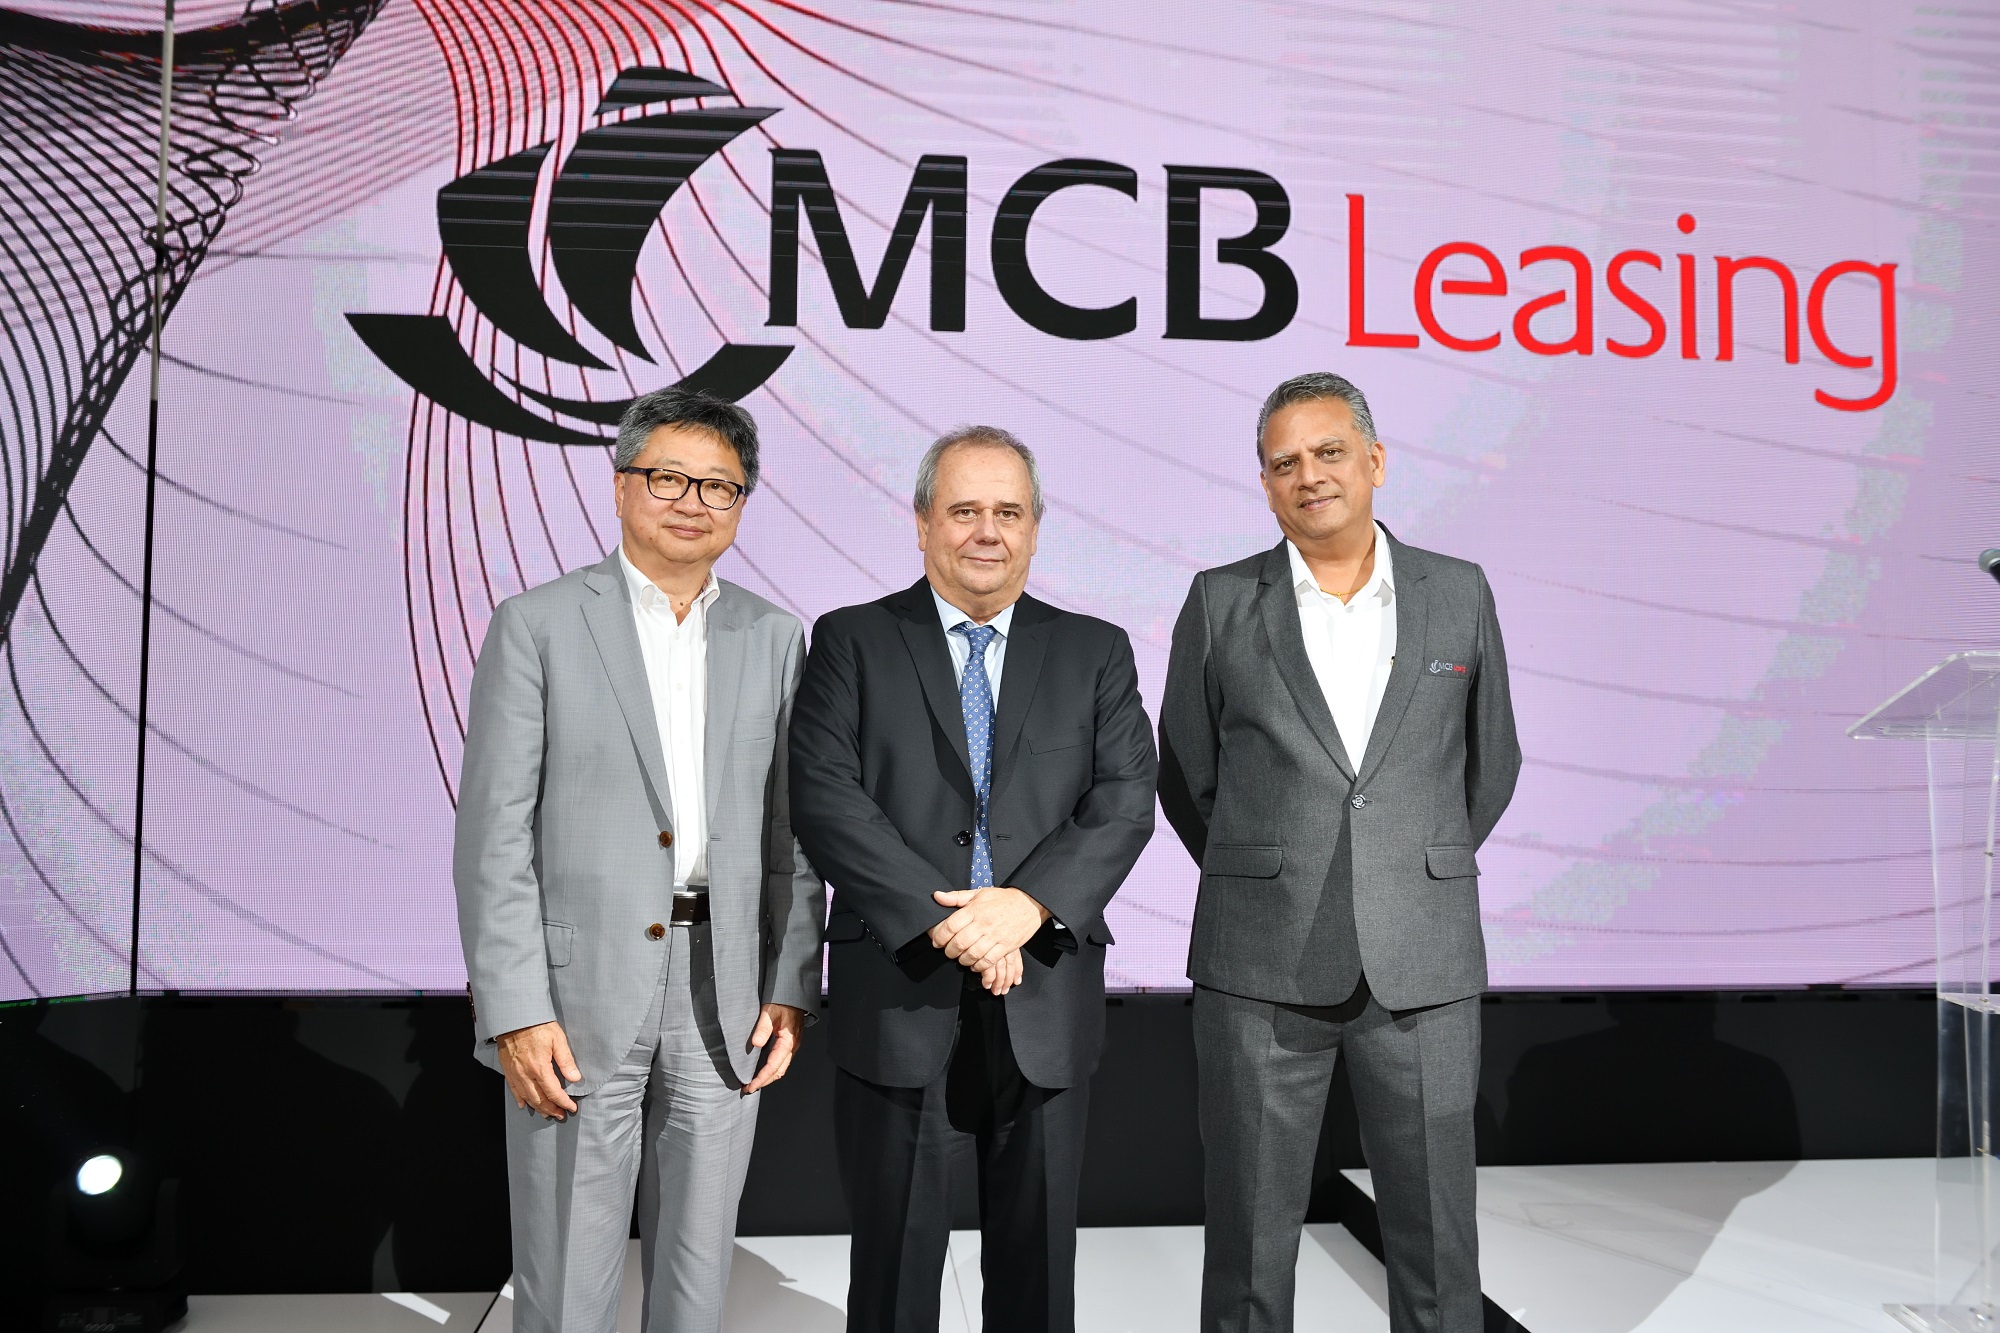 mcb leasing lexpresscars